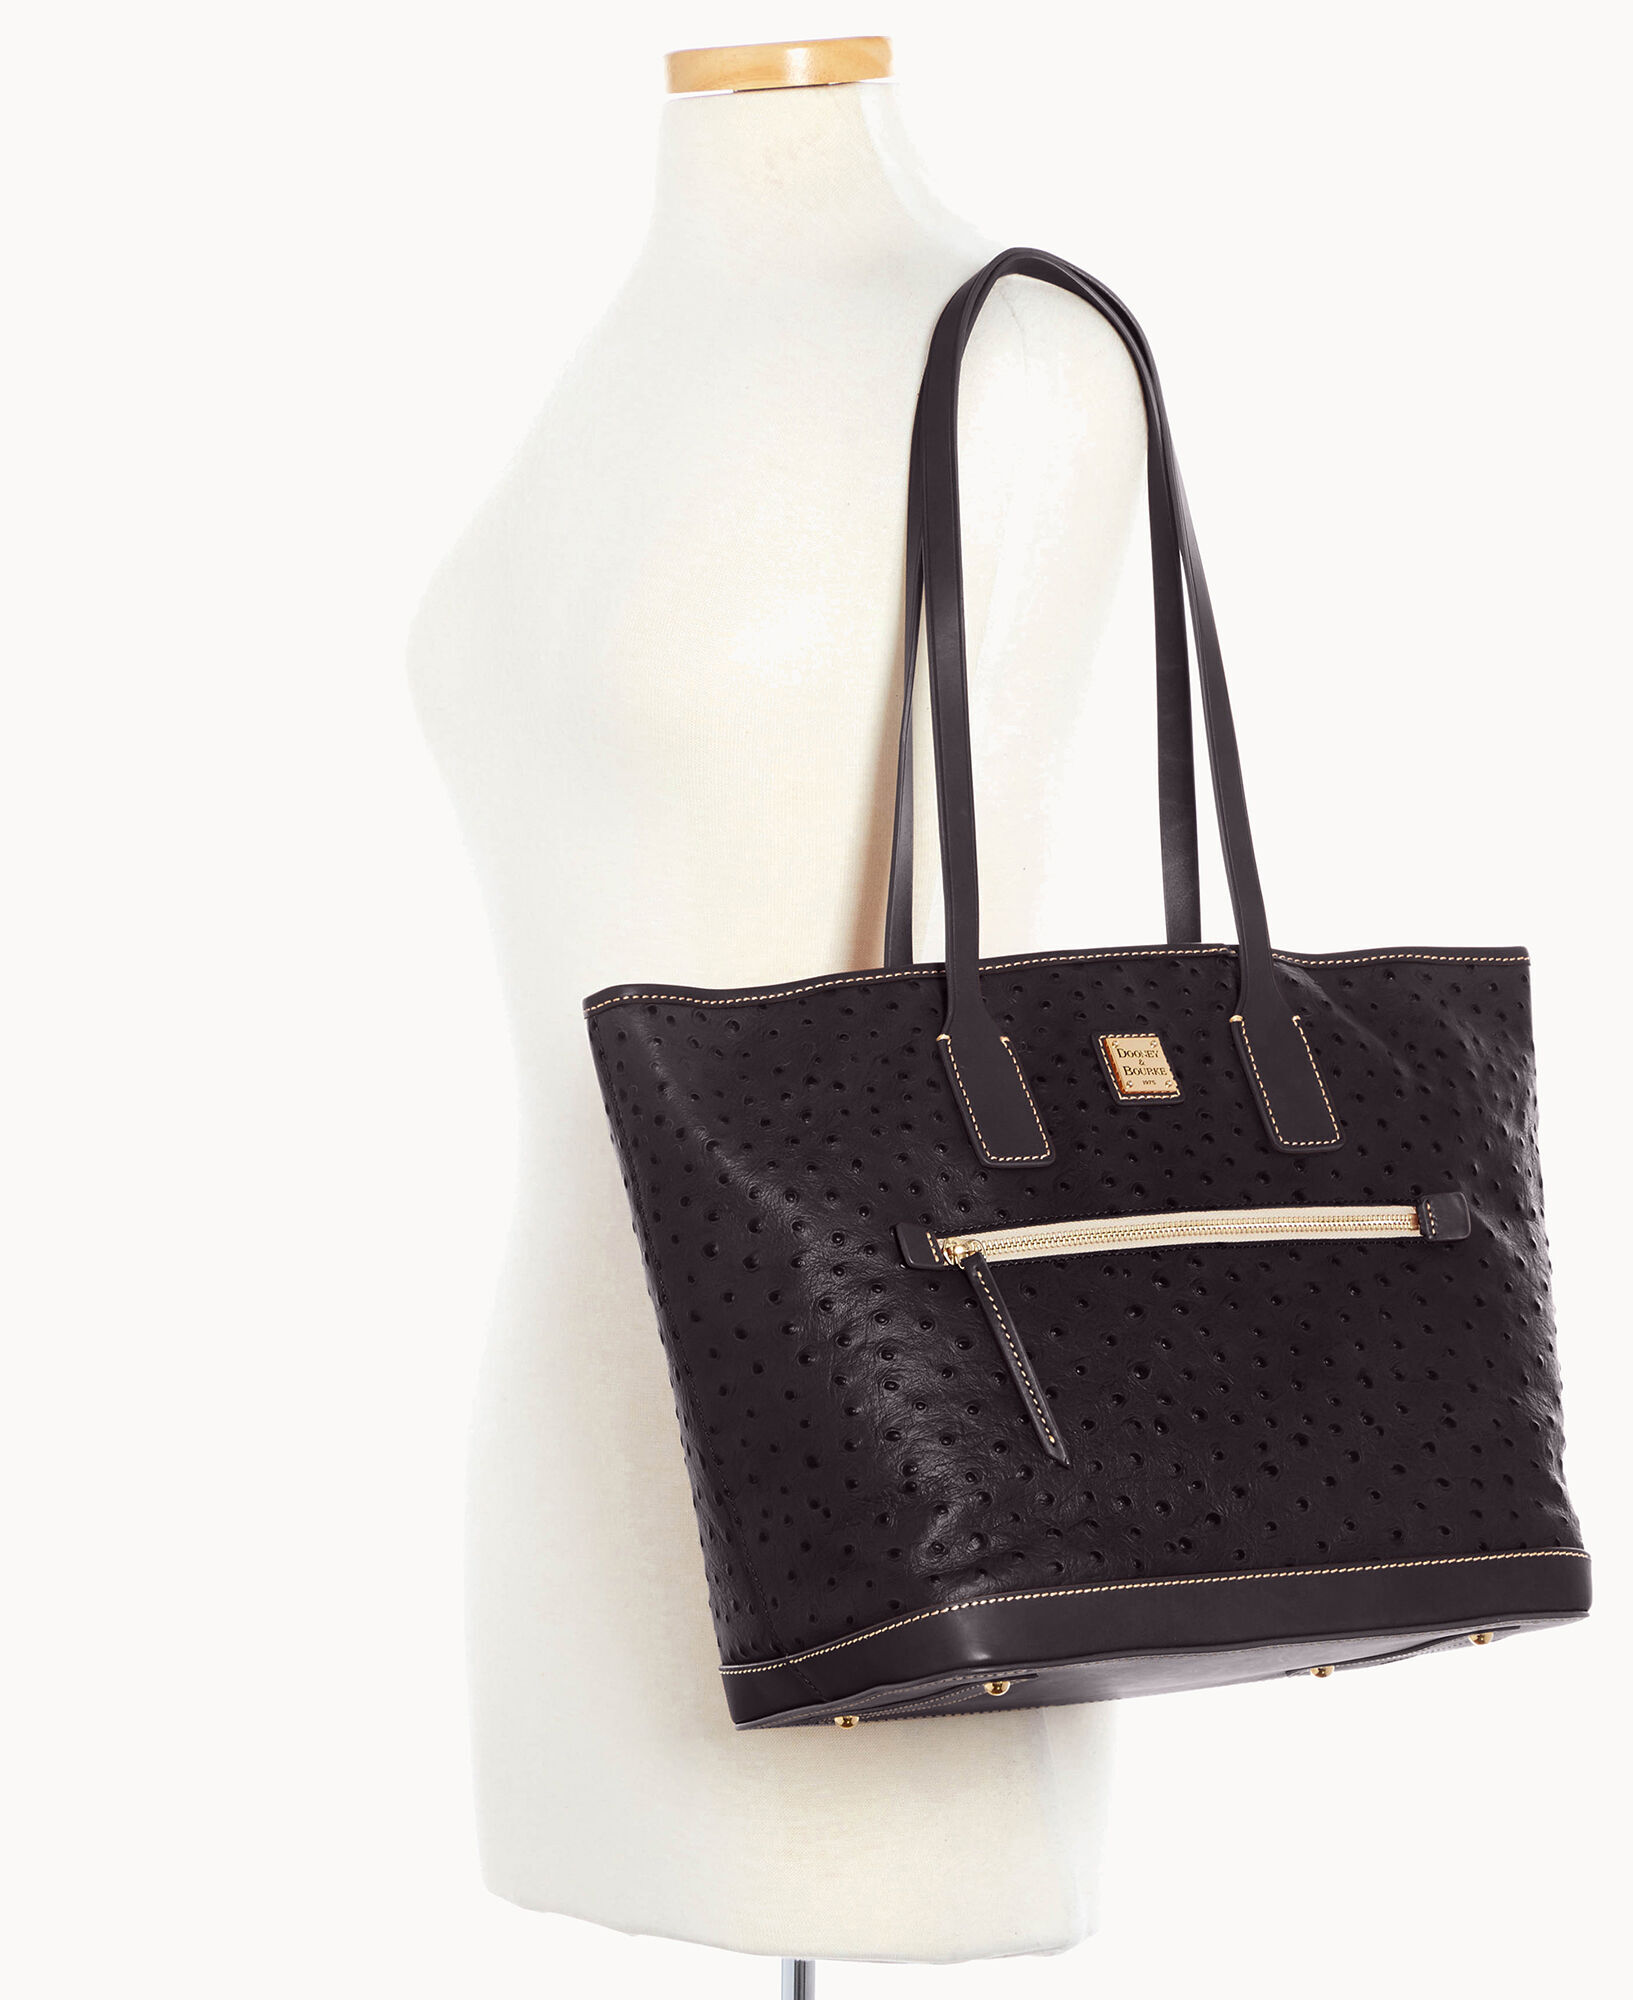 Hot Pink Ostrich Embossed Crossbody Leather Handbags Classics Bag